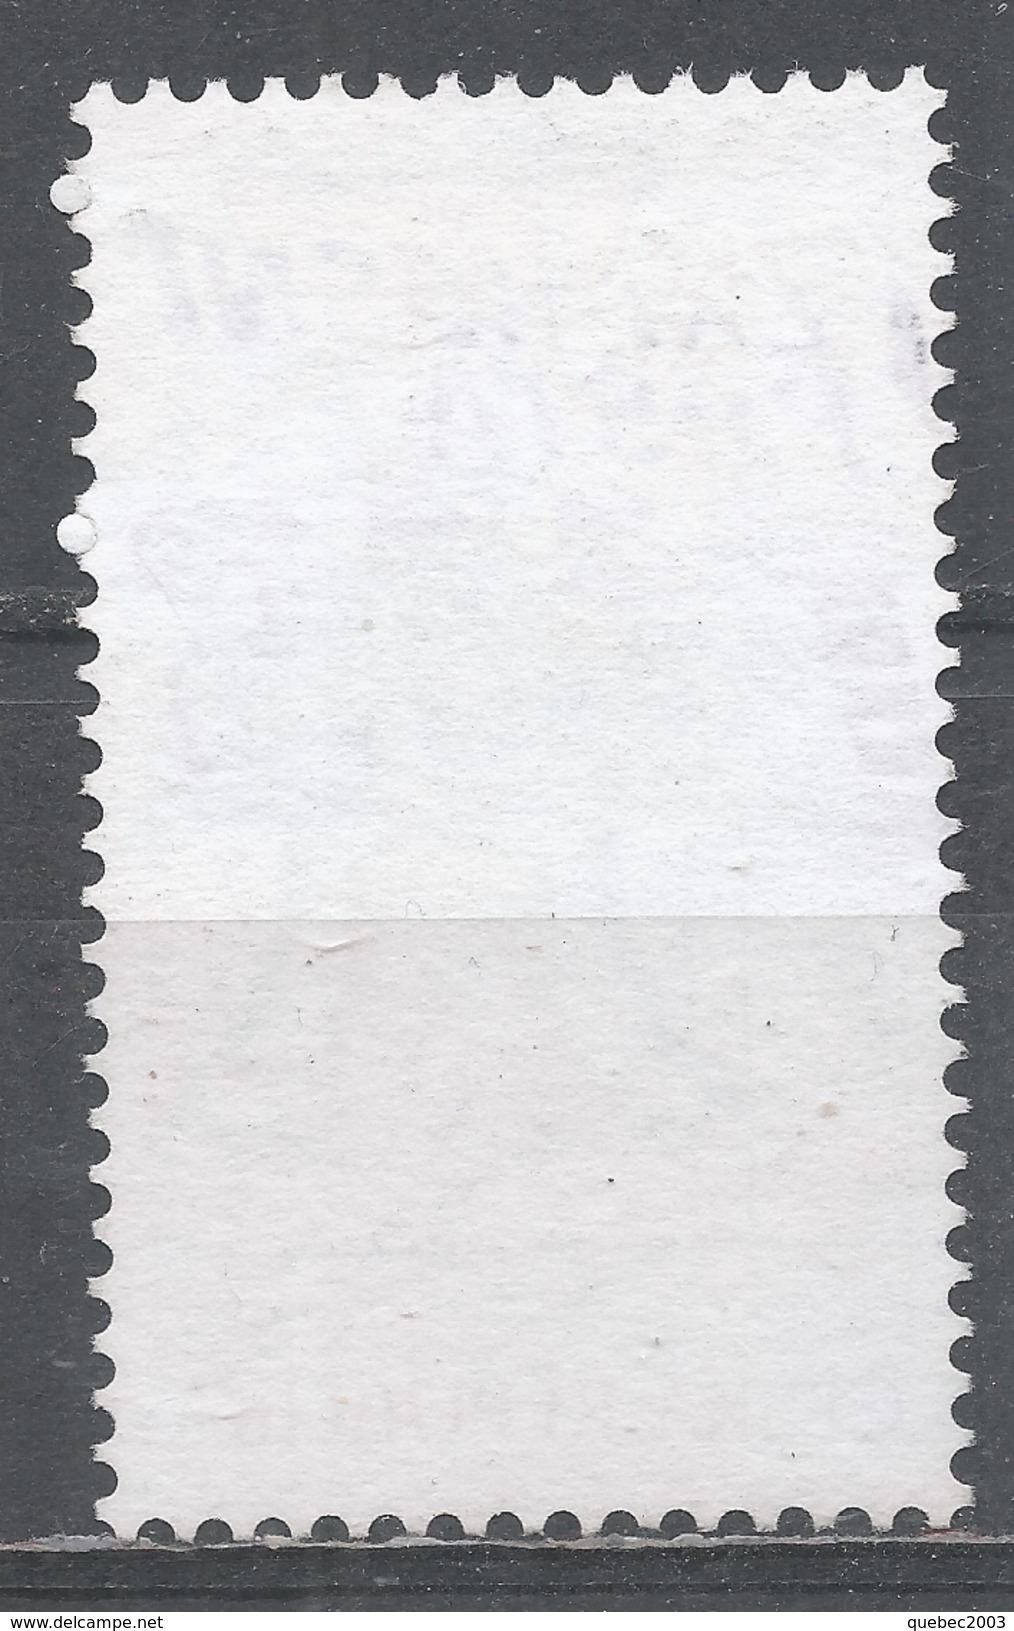 Czech Republic 2005. Scott #3279 (U) Church Bells, Benesov, 1322 Havlickuv Brod - Used Stamps